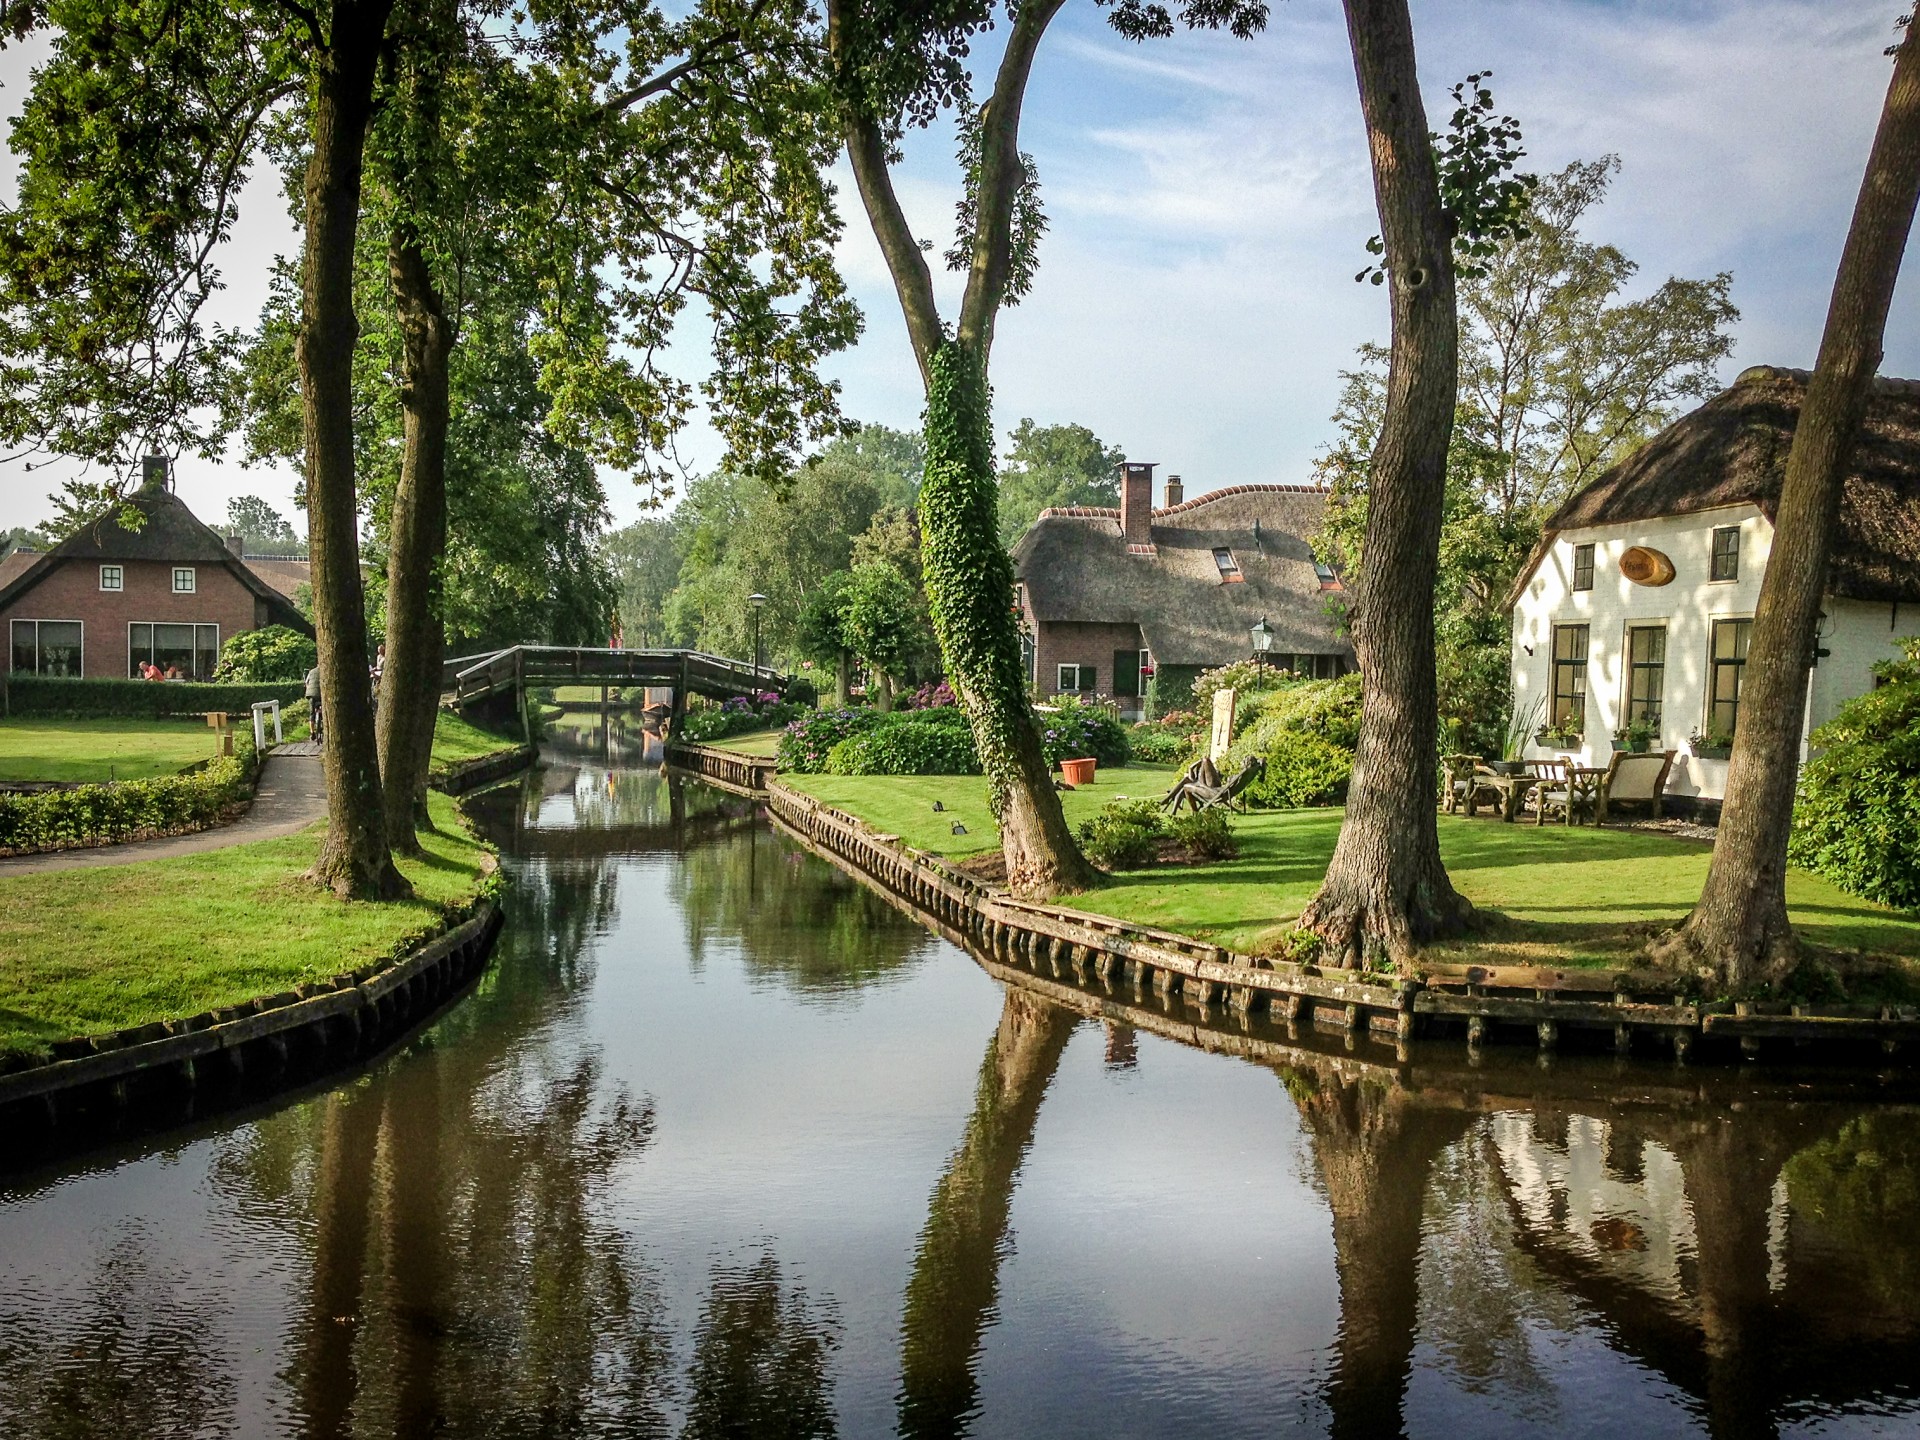 Giethoorn, Netherlands, the "Dutch Venice"